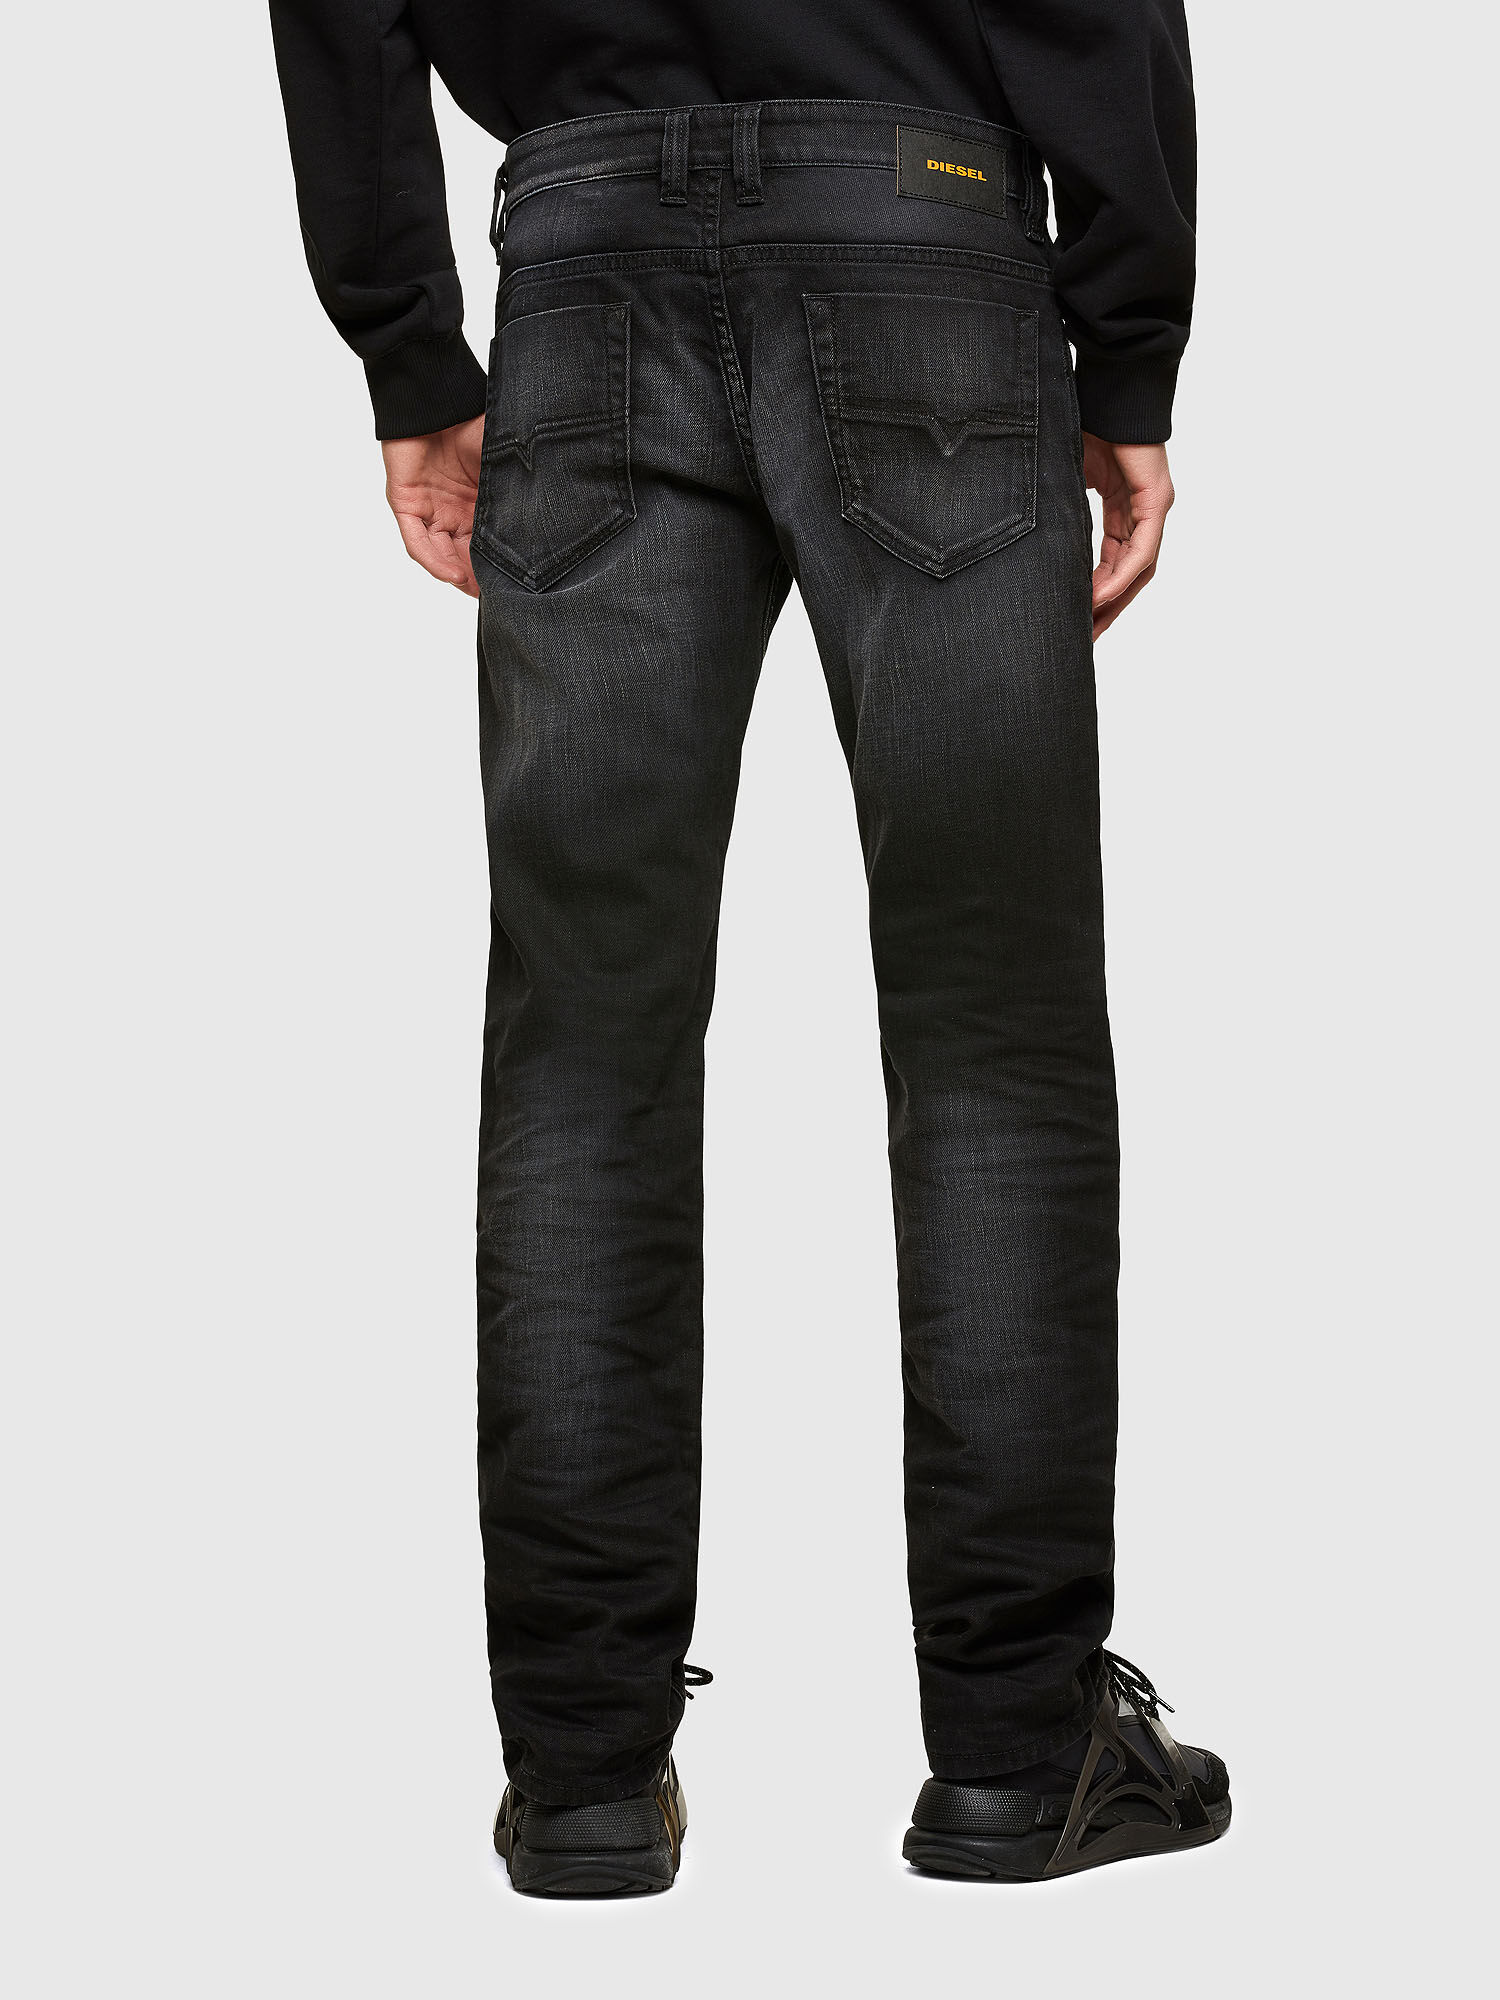 Safado CN059 Man: Straight Black/Dark grey Jeans | Diesel